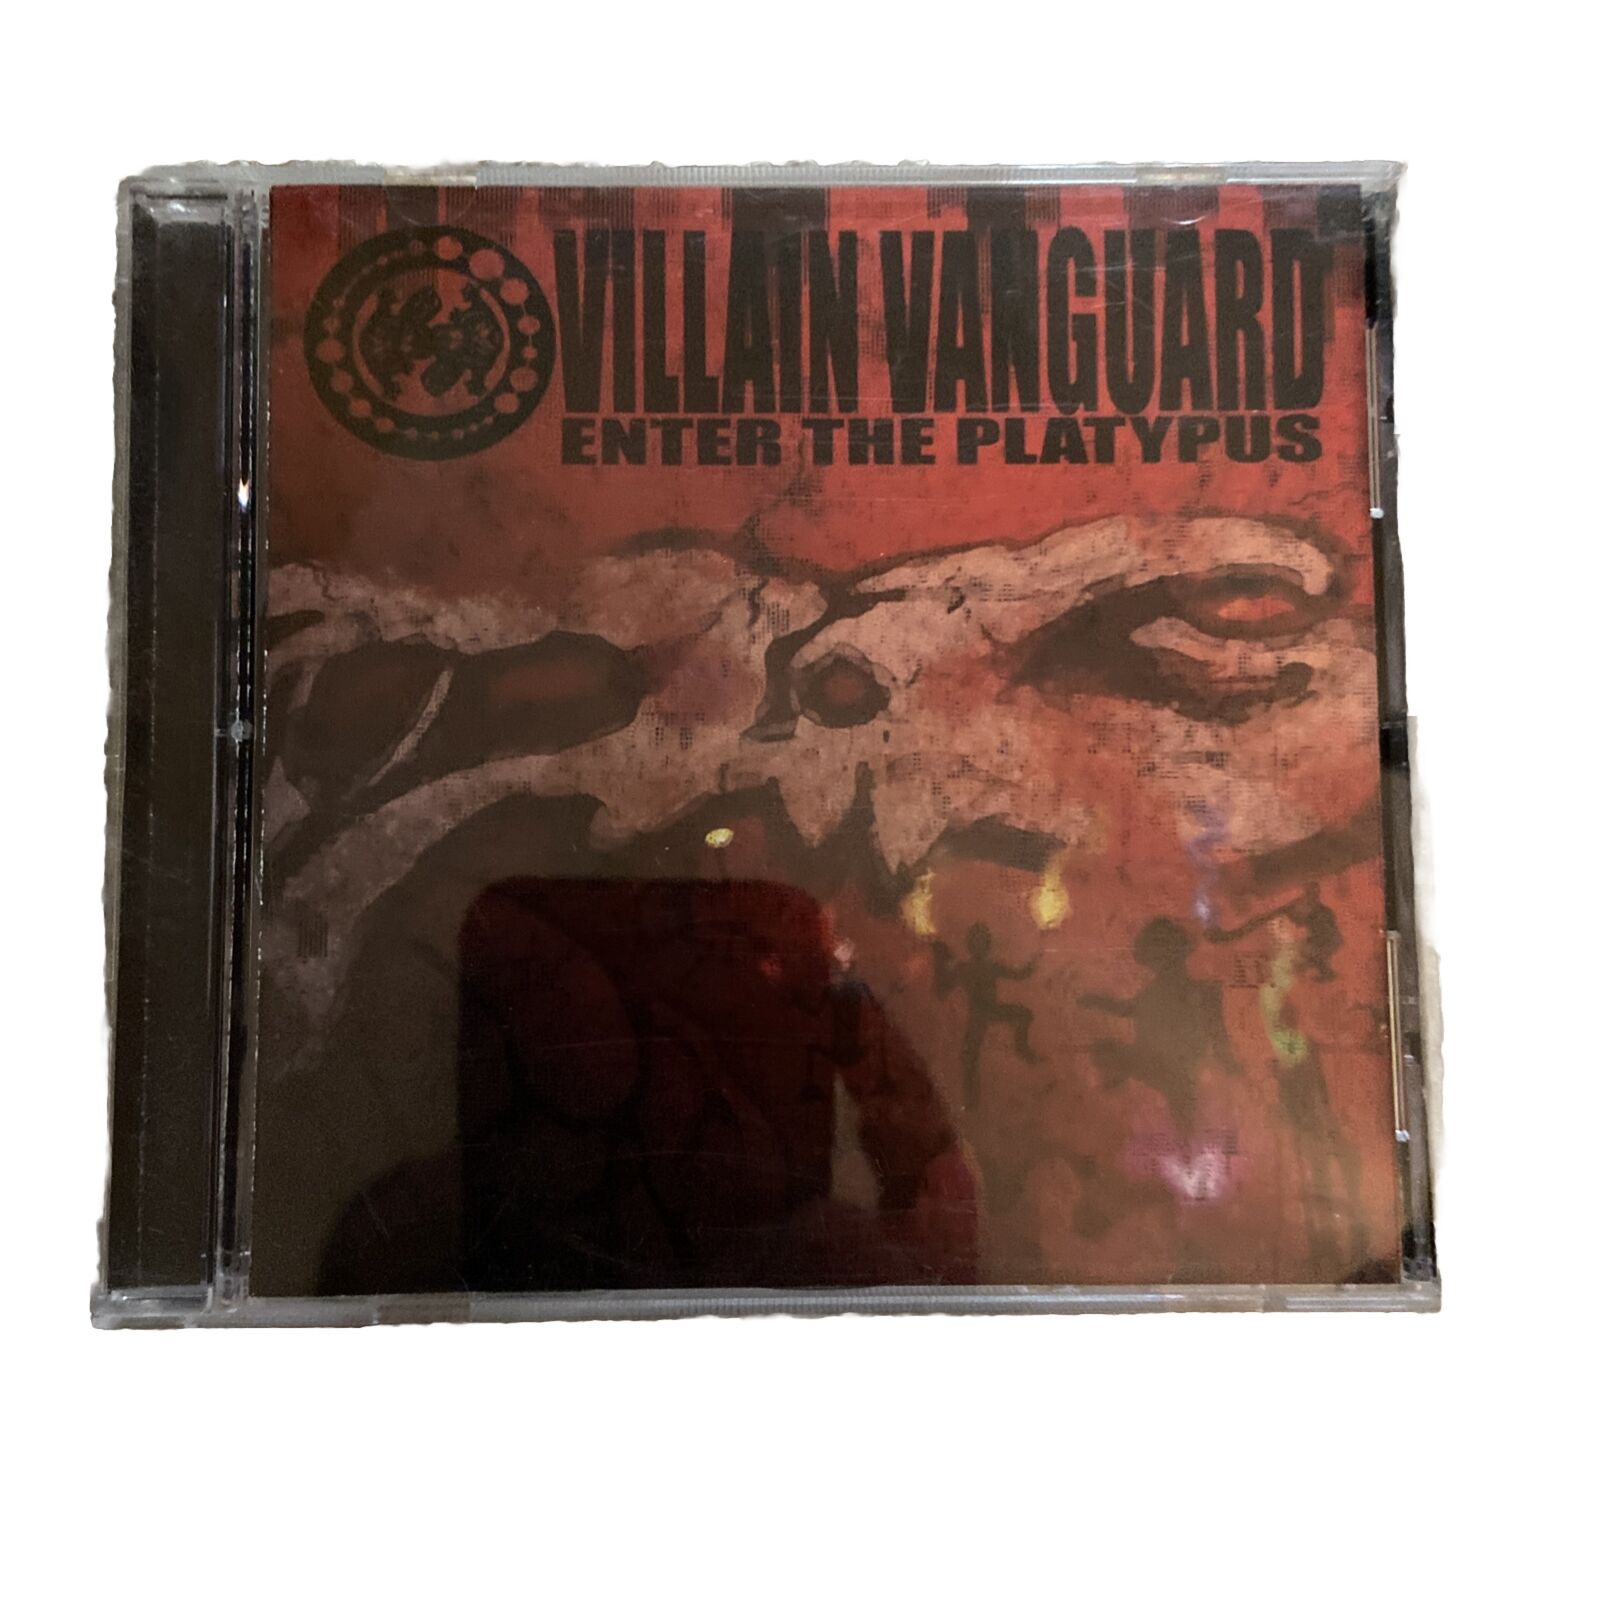 Villian Vanguard - Enter The Platypus (Cd) Rare OOP Texas Band